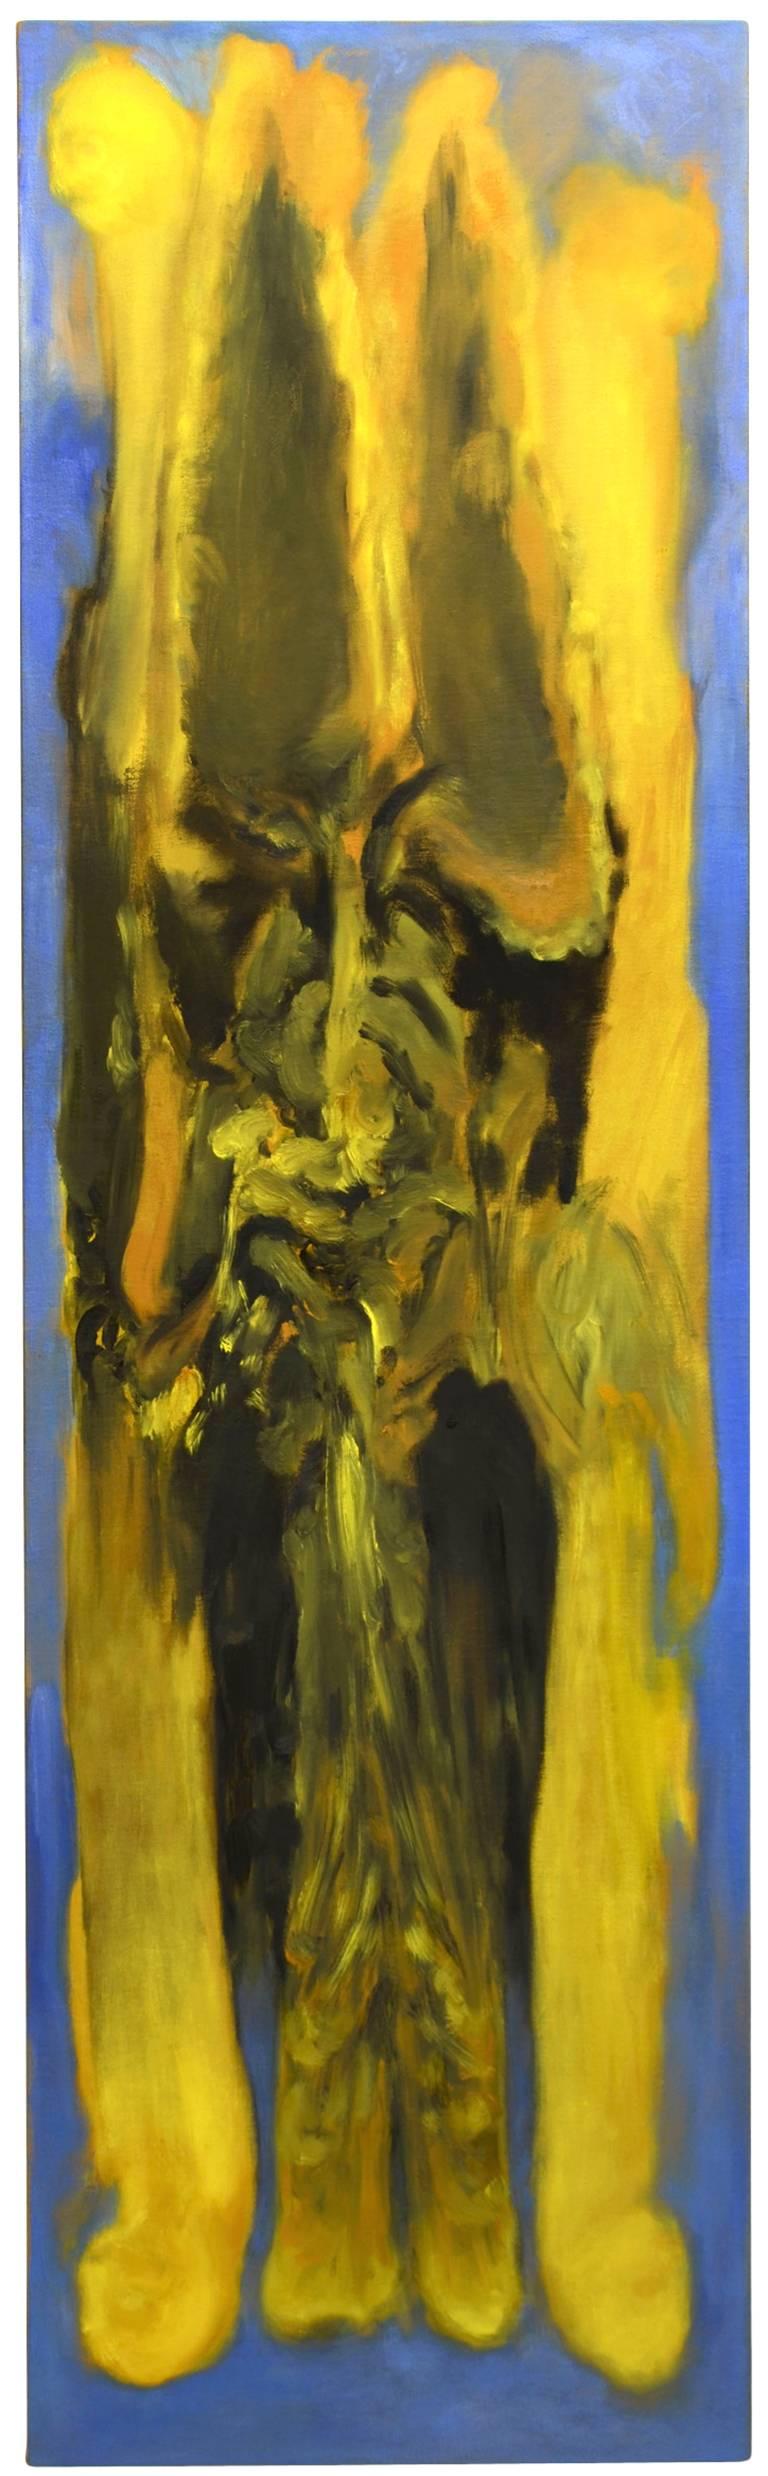 John Benicewicz Abstract Painting - Self Portrait